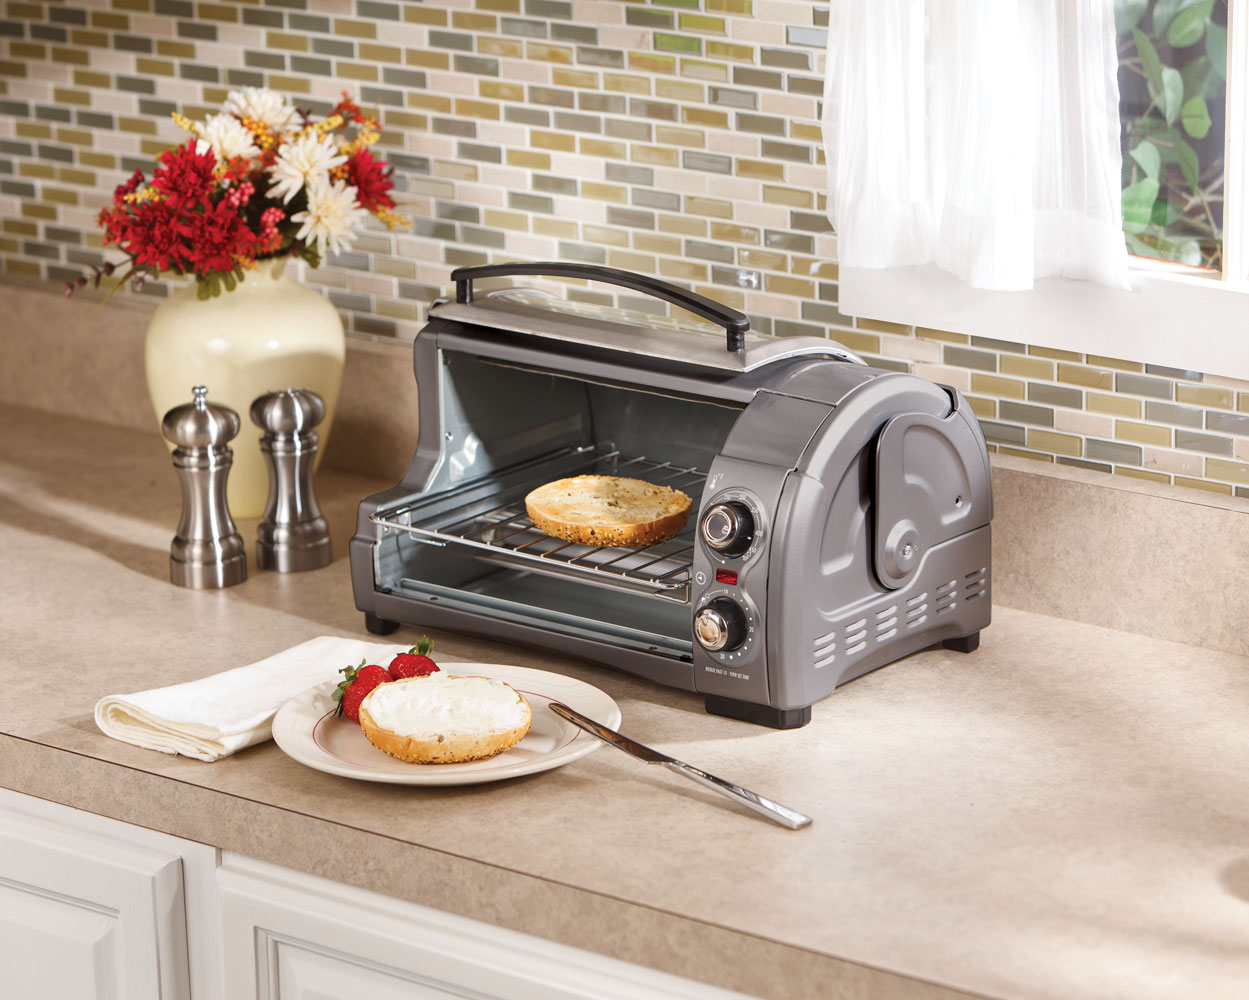 Black & Decker CTO650 Toast-R-Oven Countertop Oven/Broiler, Bake